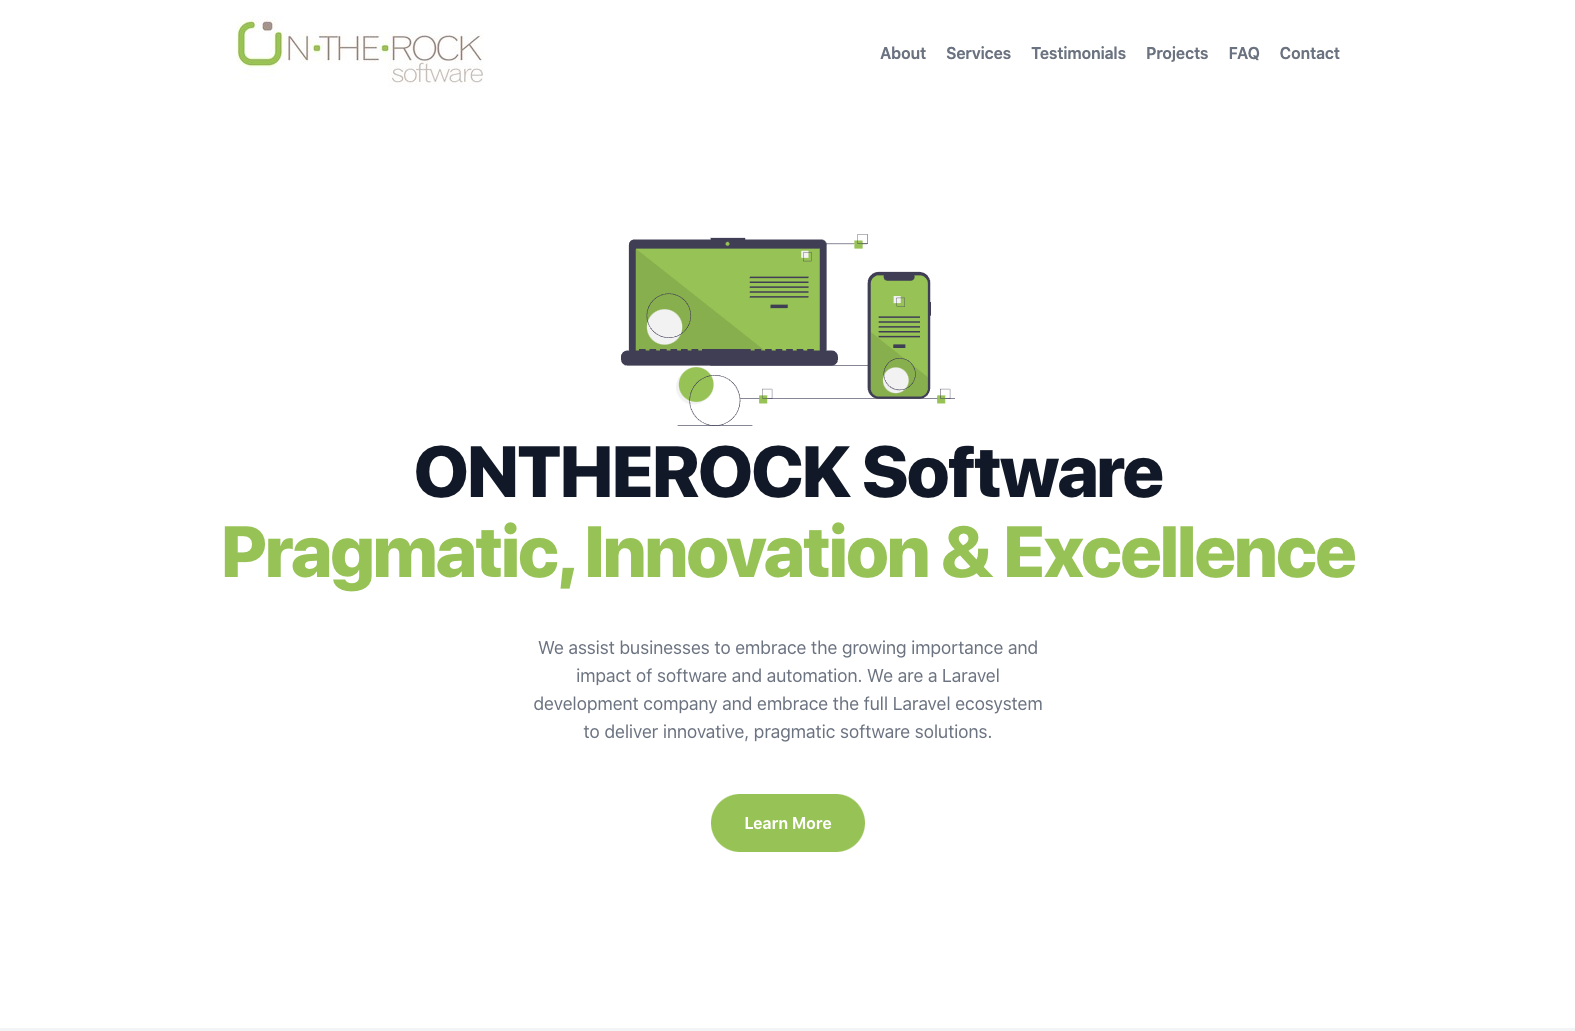 ONTHEROCK Software